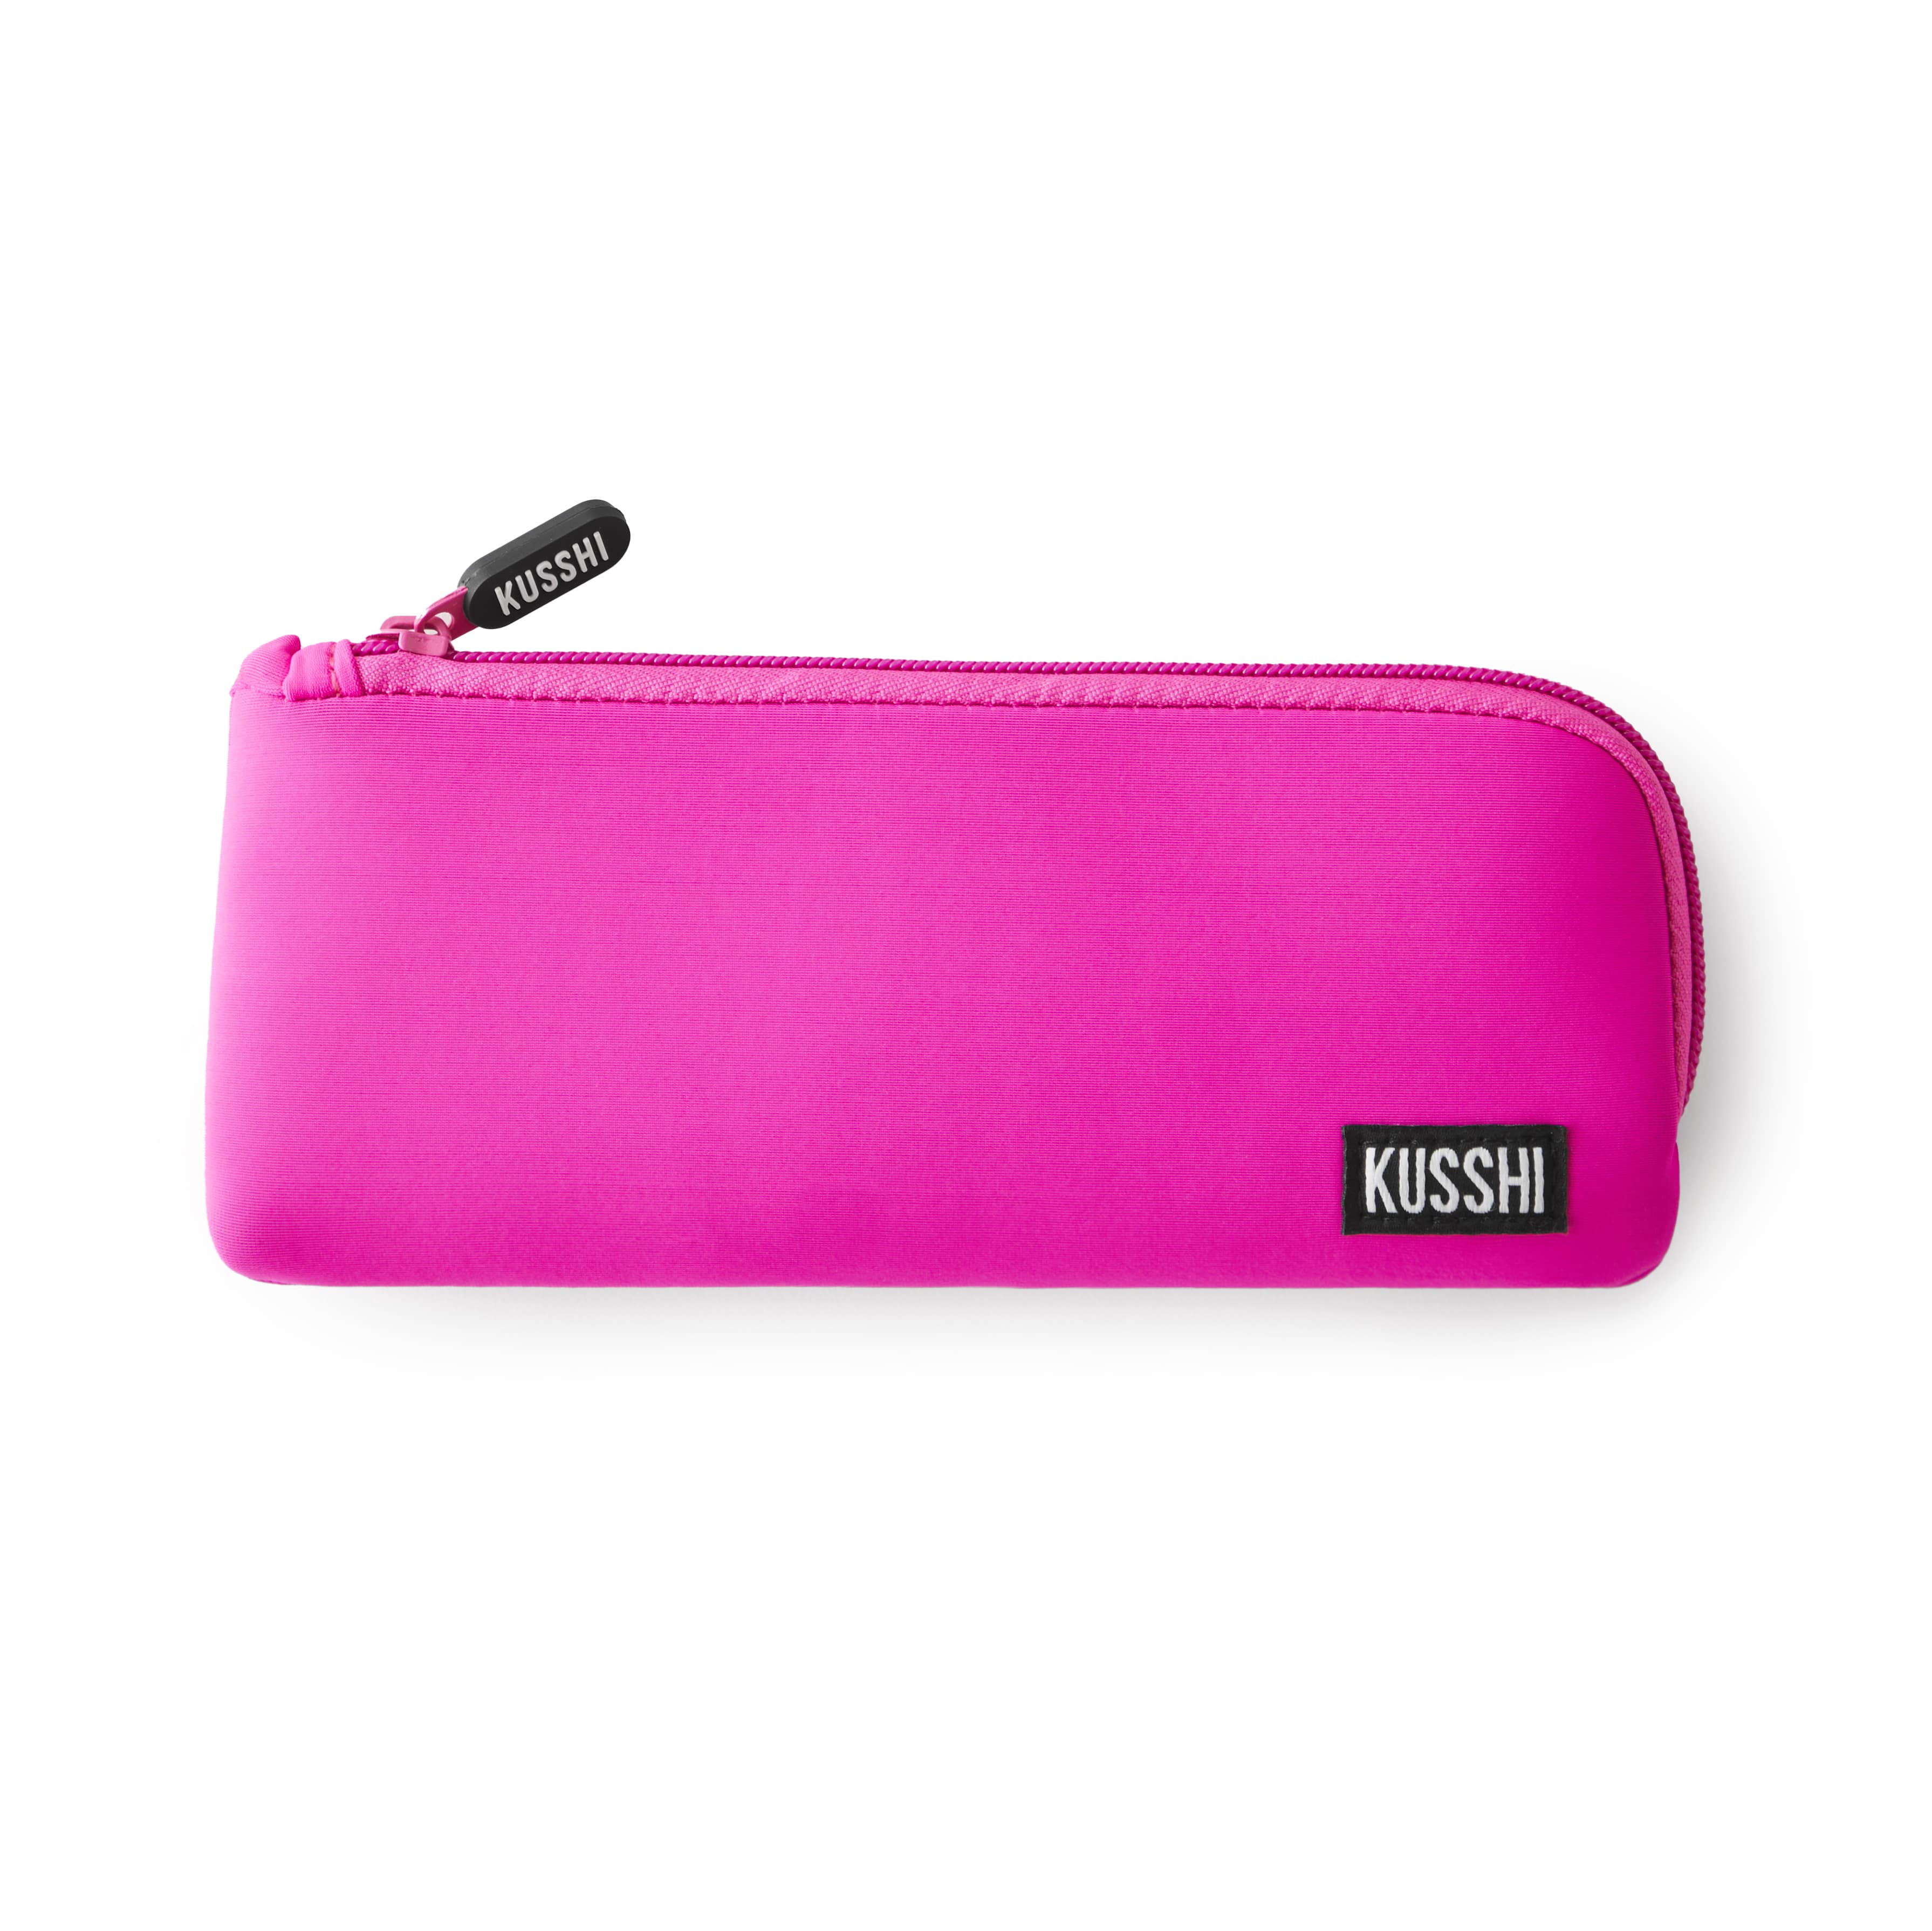 Kusshi Pencil Case Pink